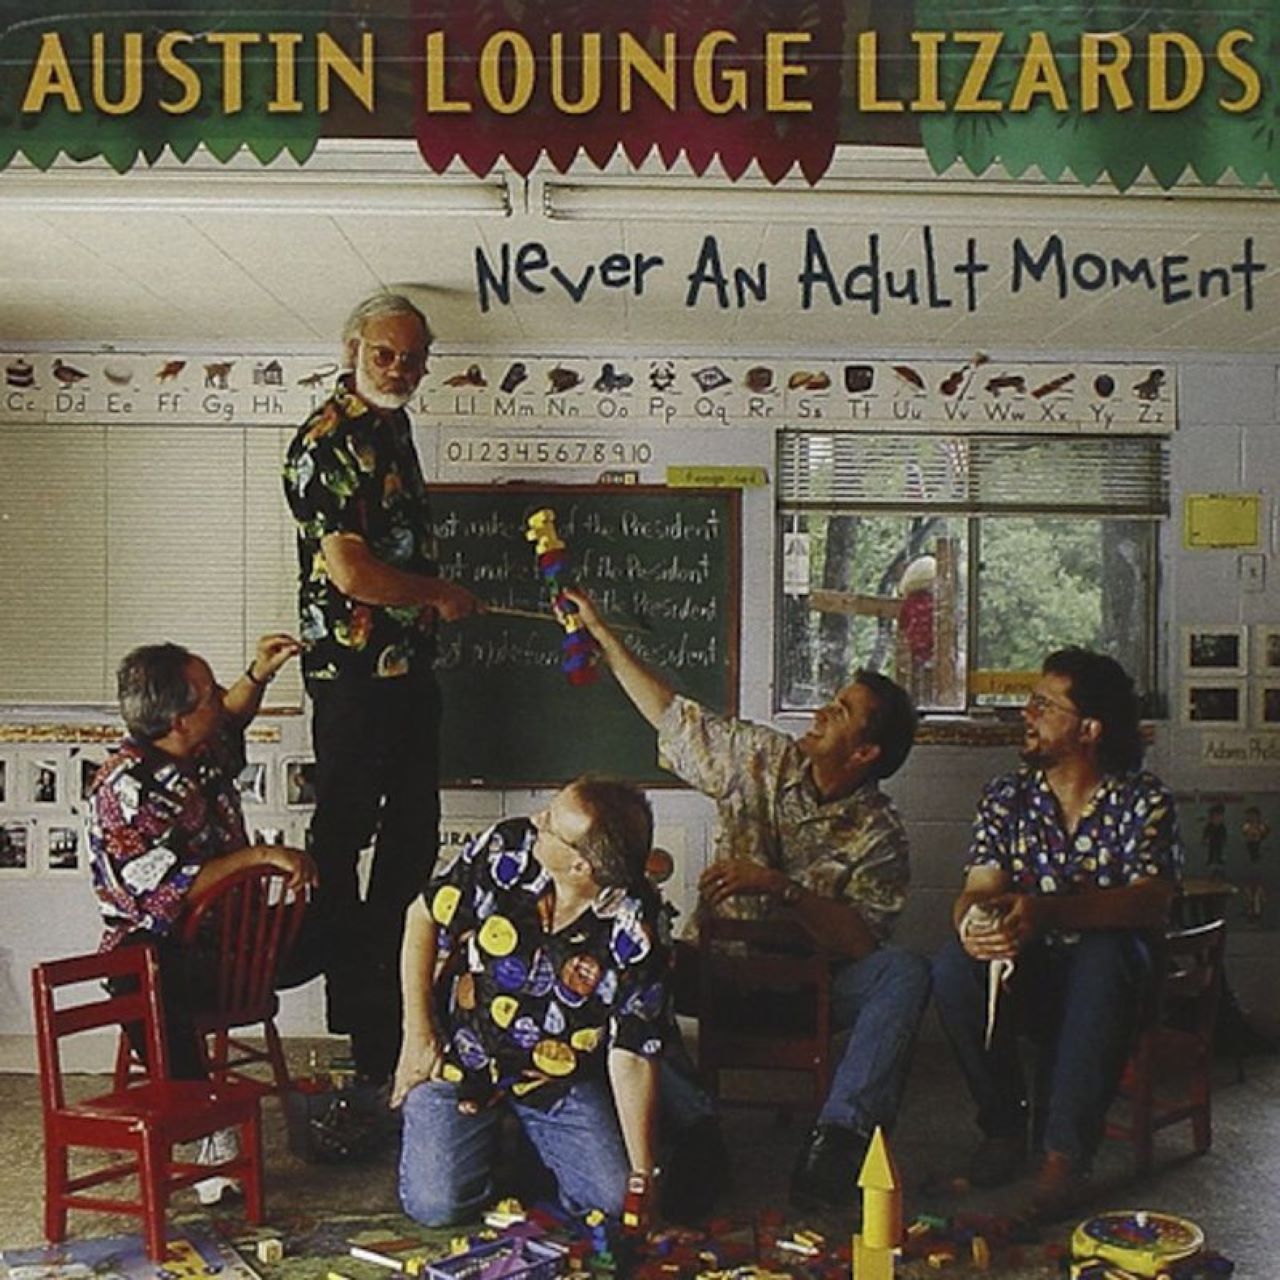 Austin Lounge Lizards - Never An Adult Moment cover album